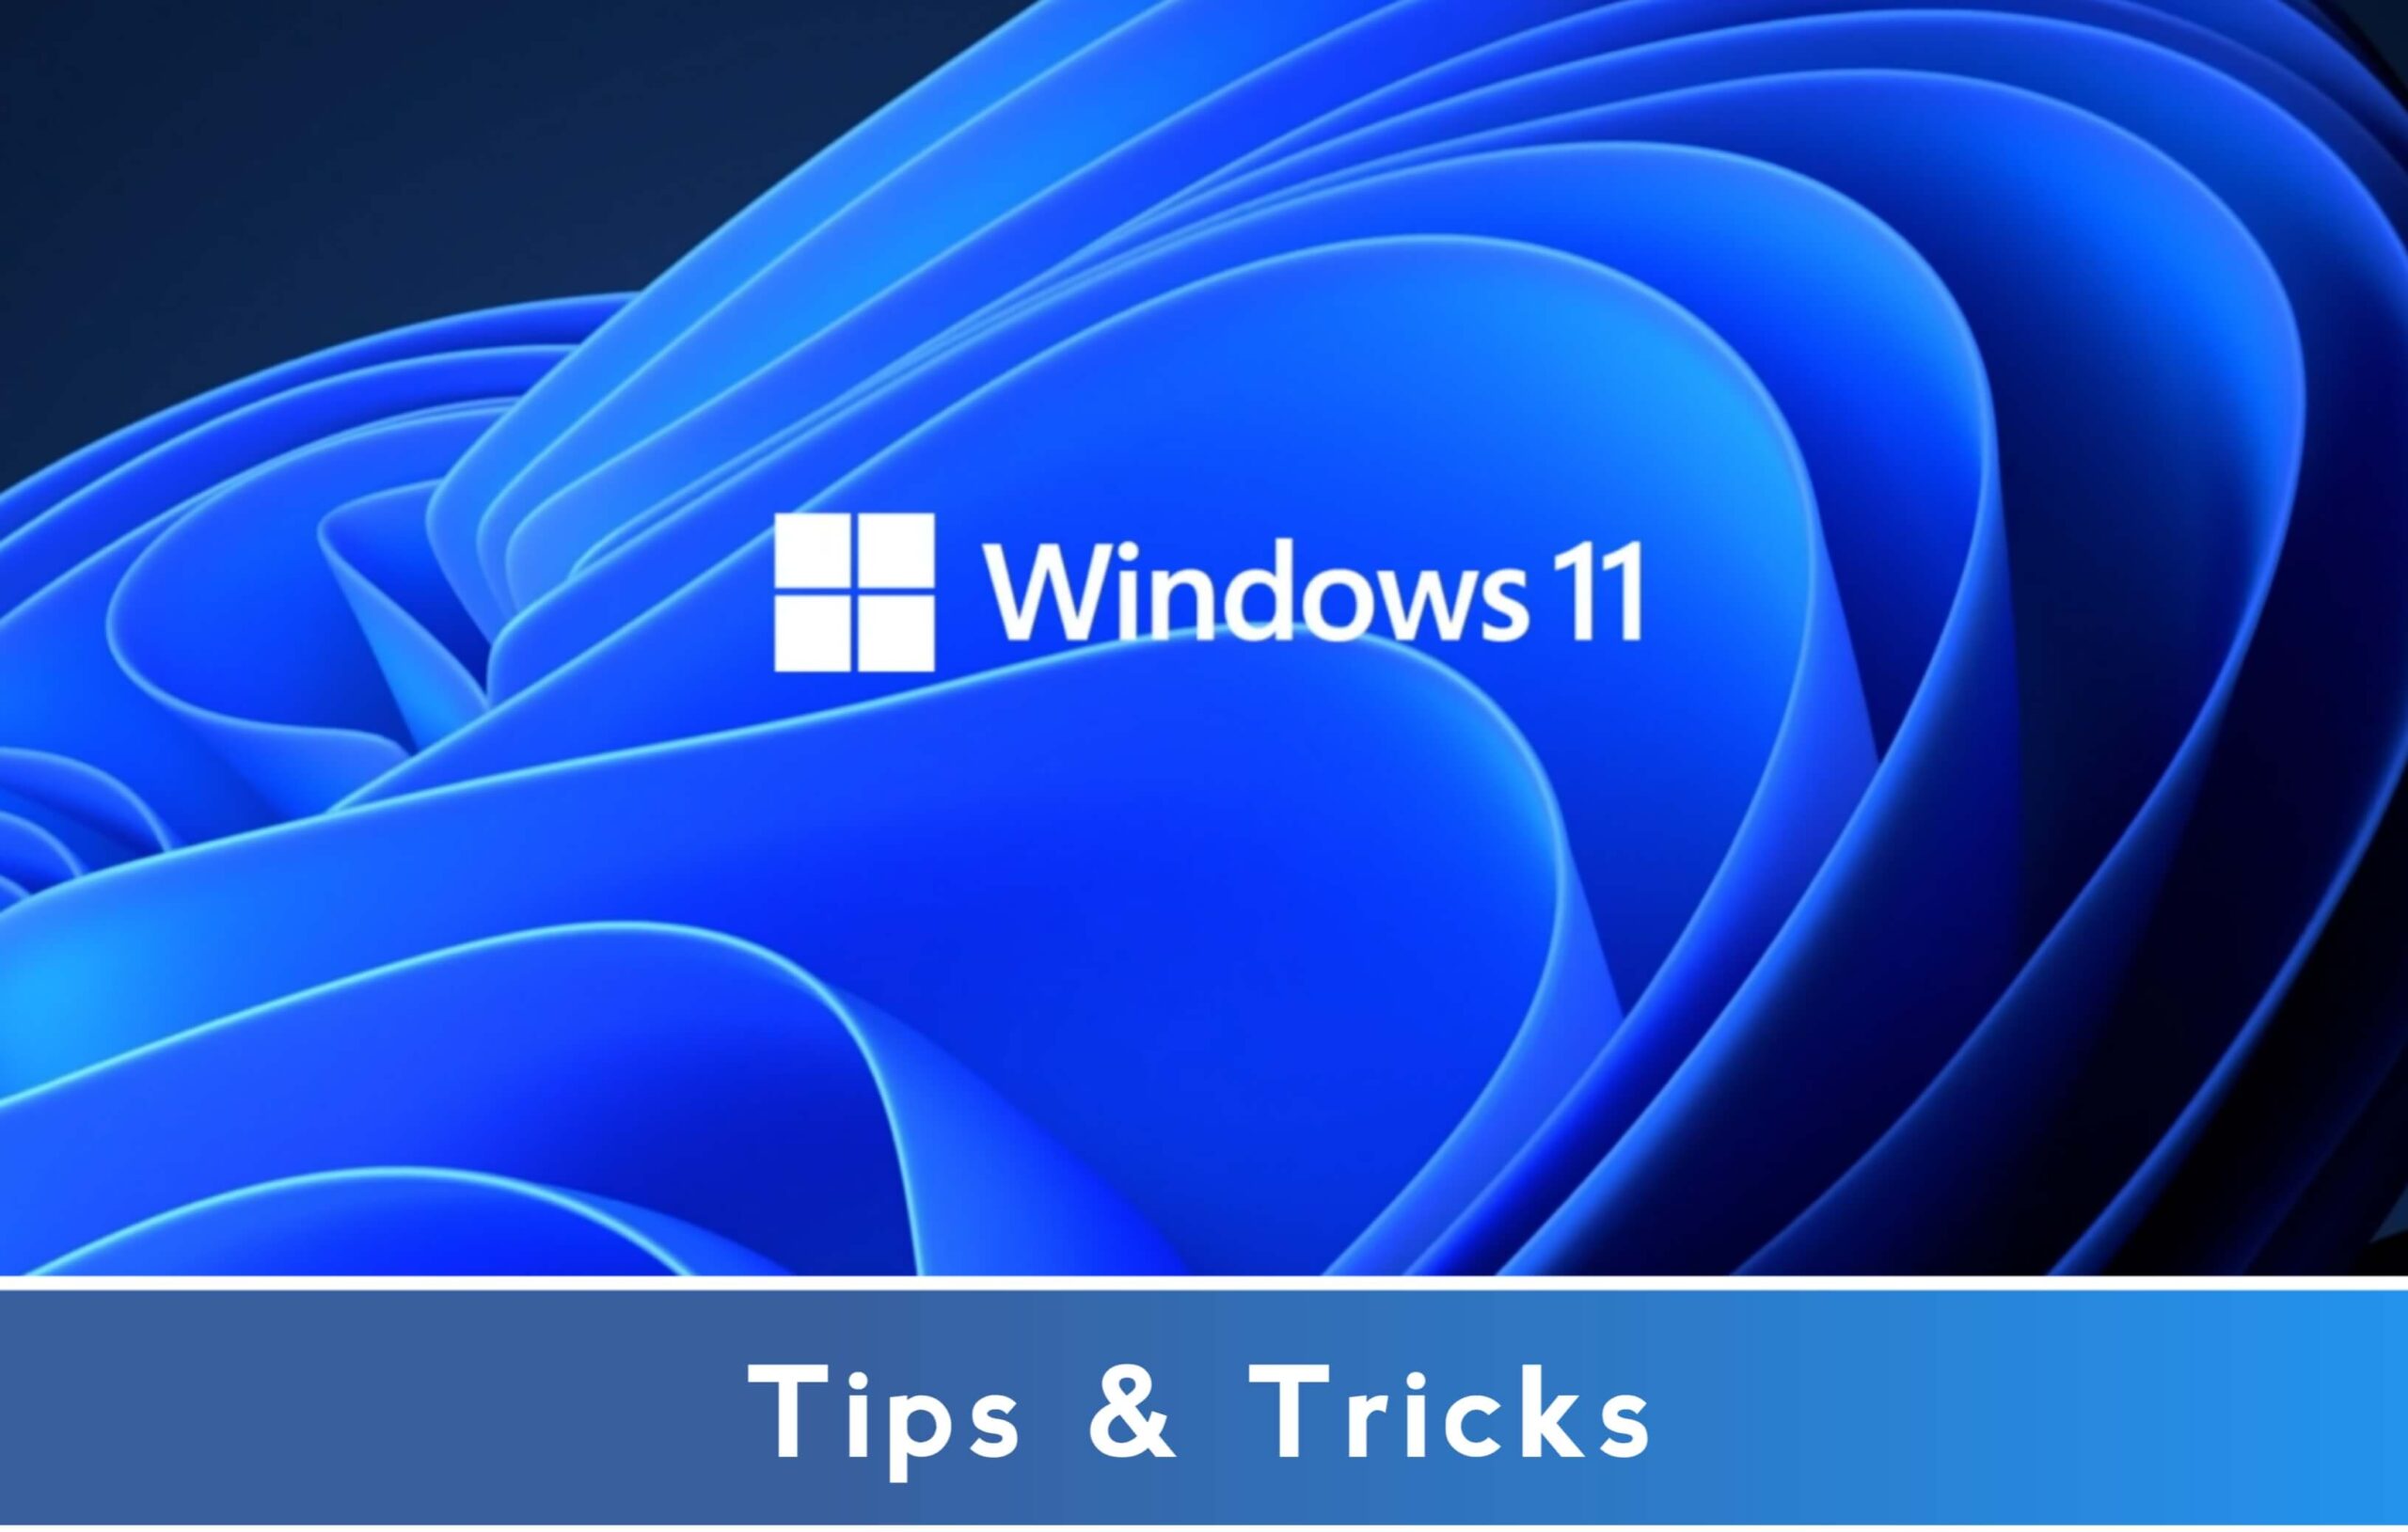 Windows 11 tips & tricks